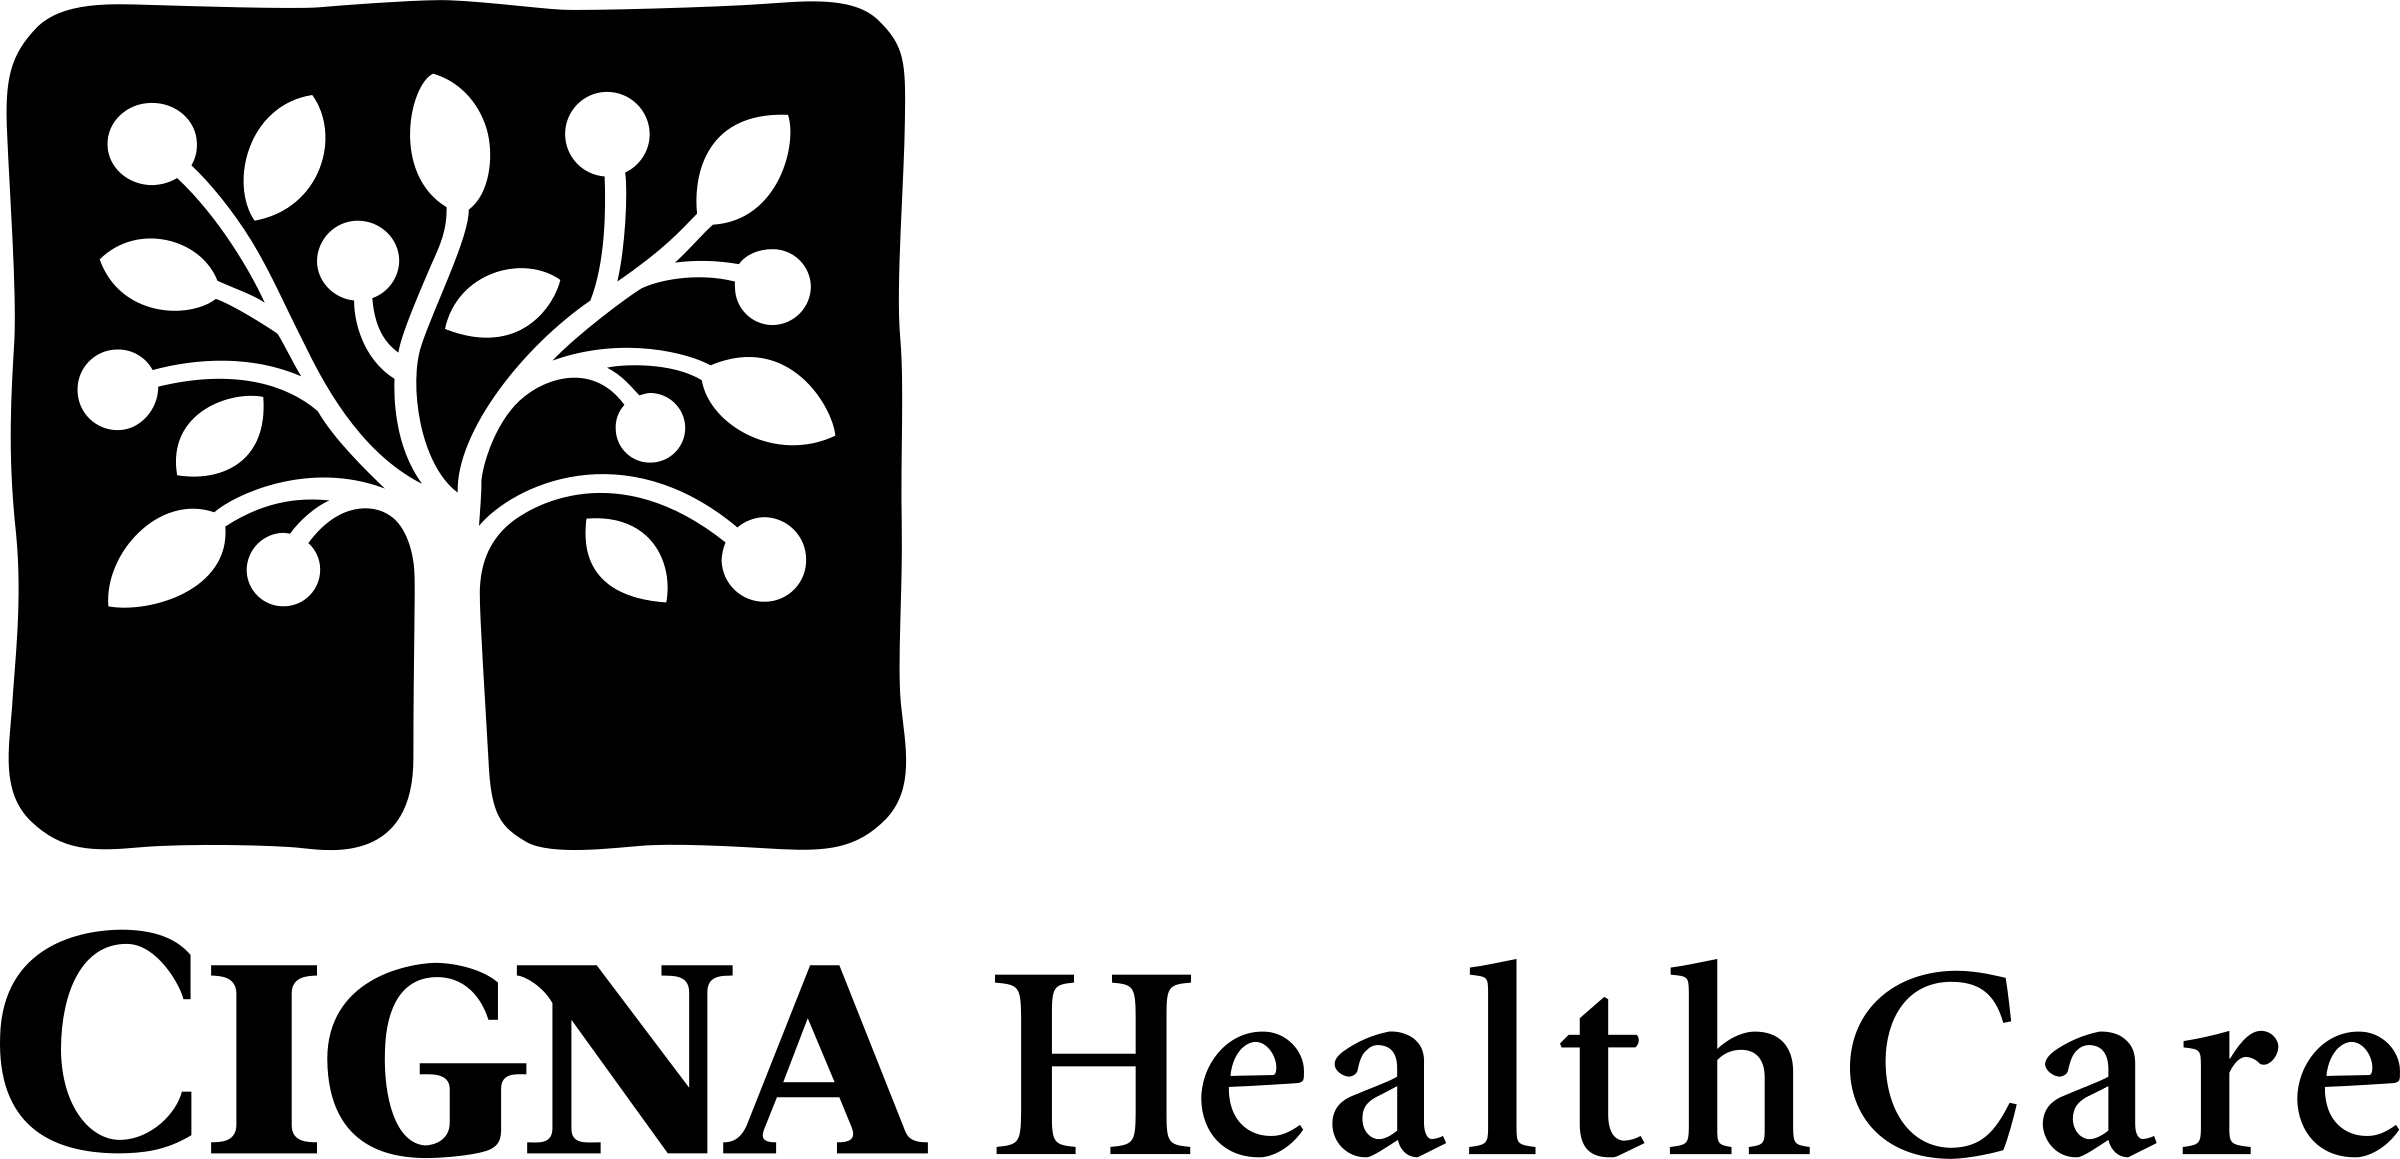 Cigna logo PNG Gambar berkualitas tinggi